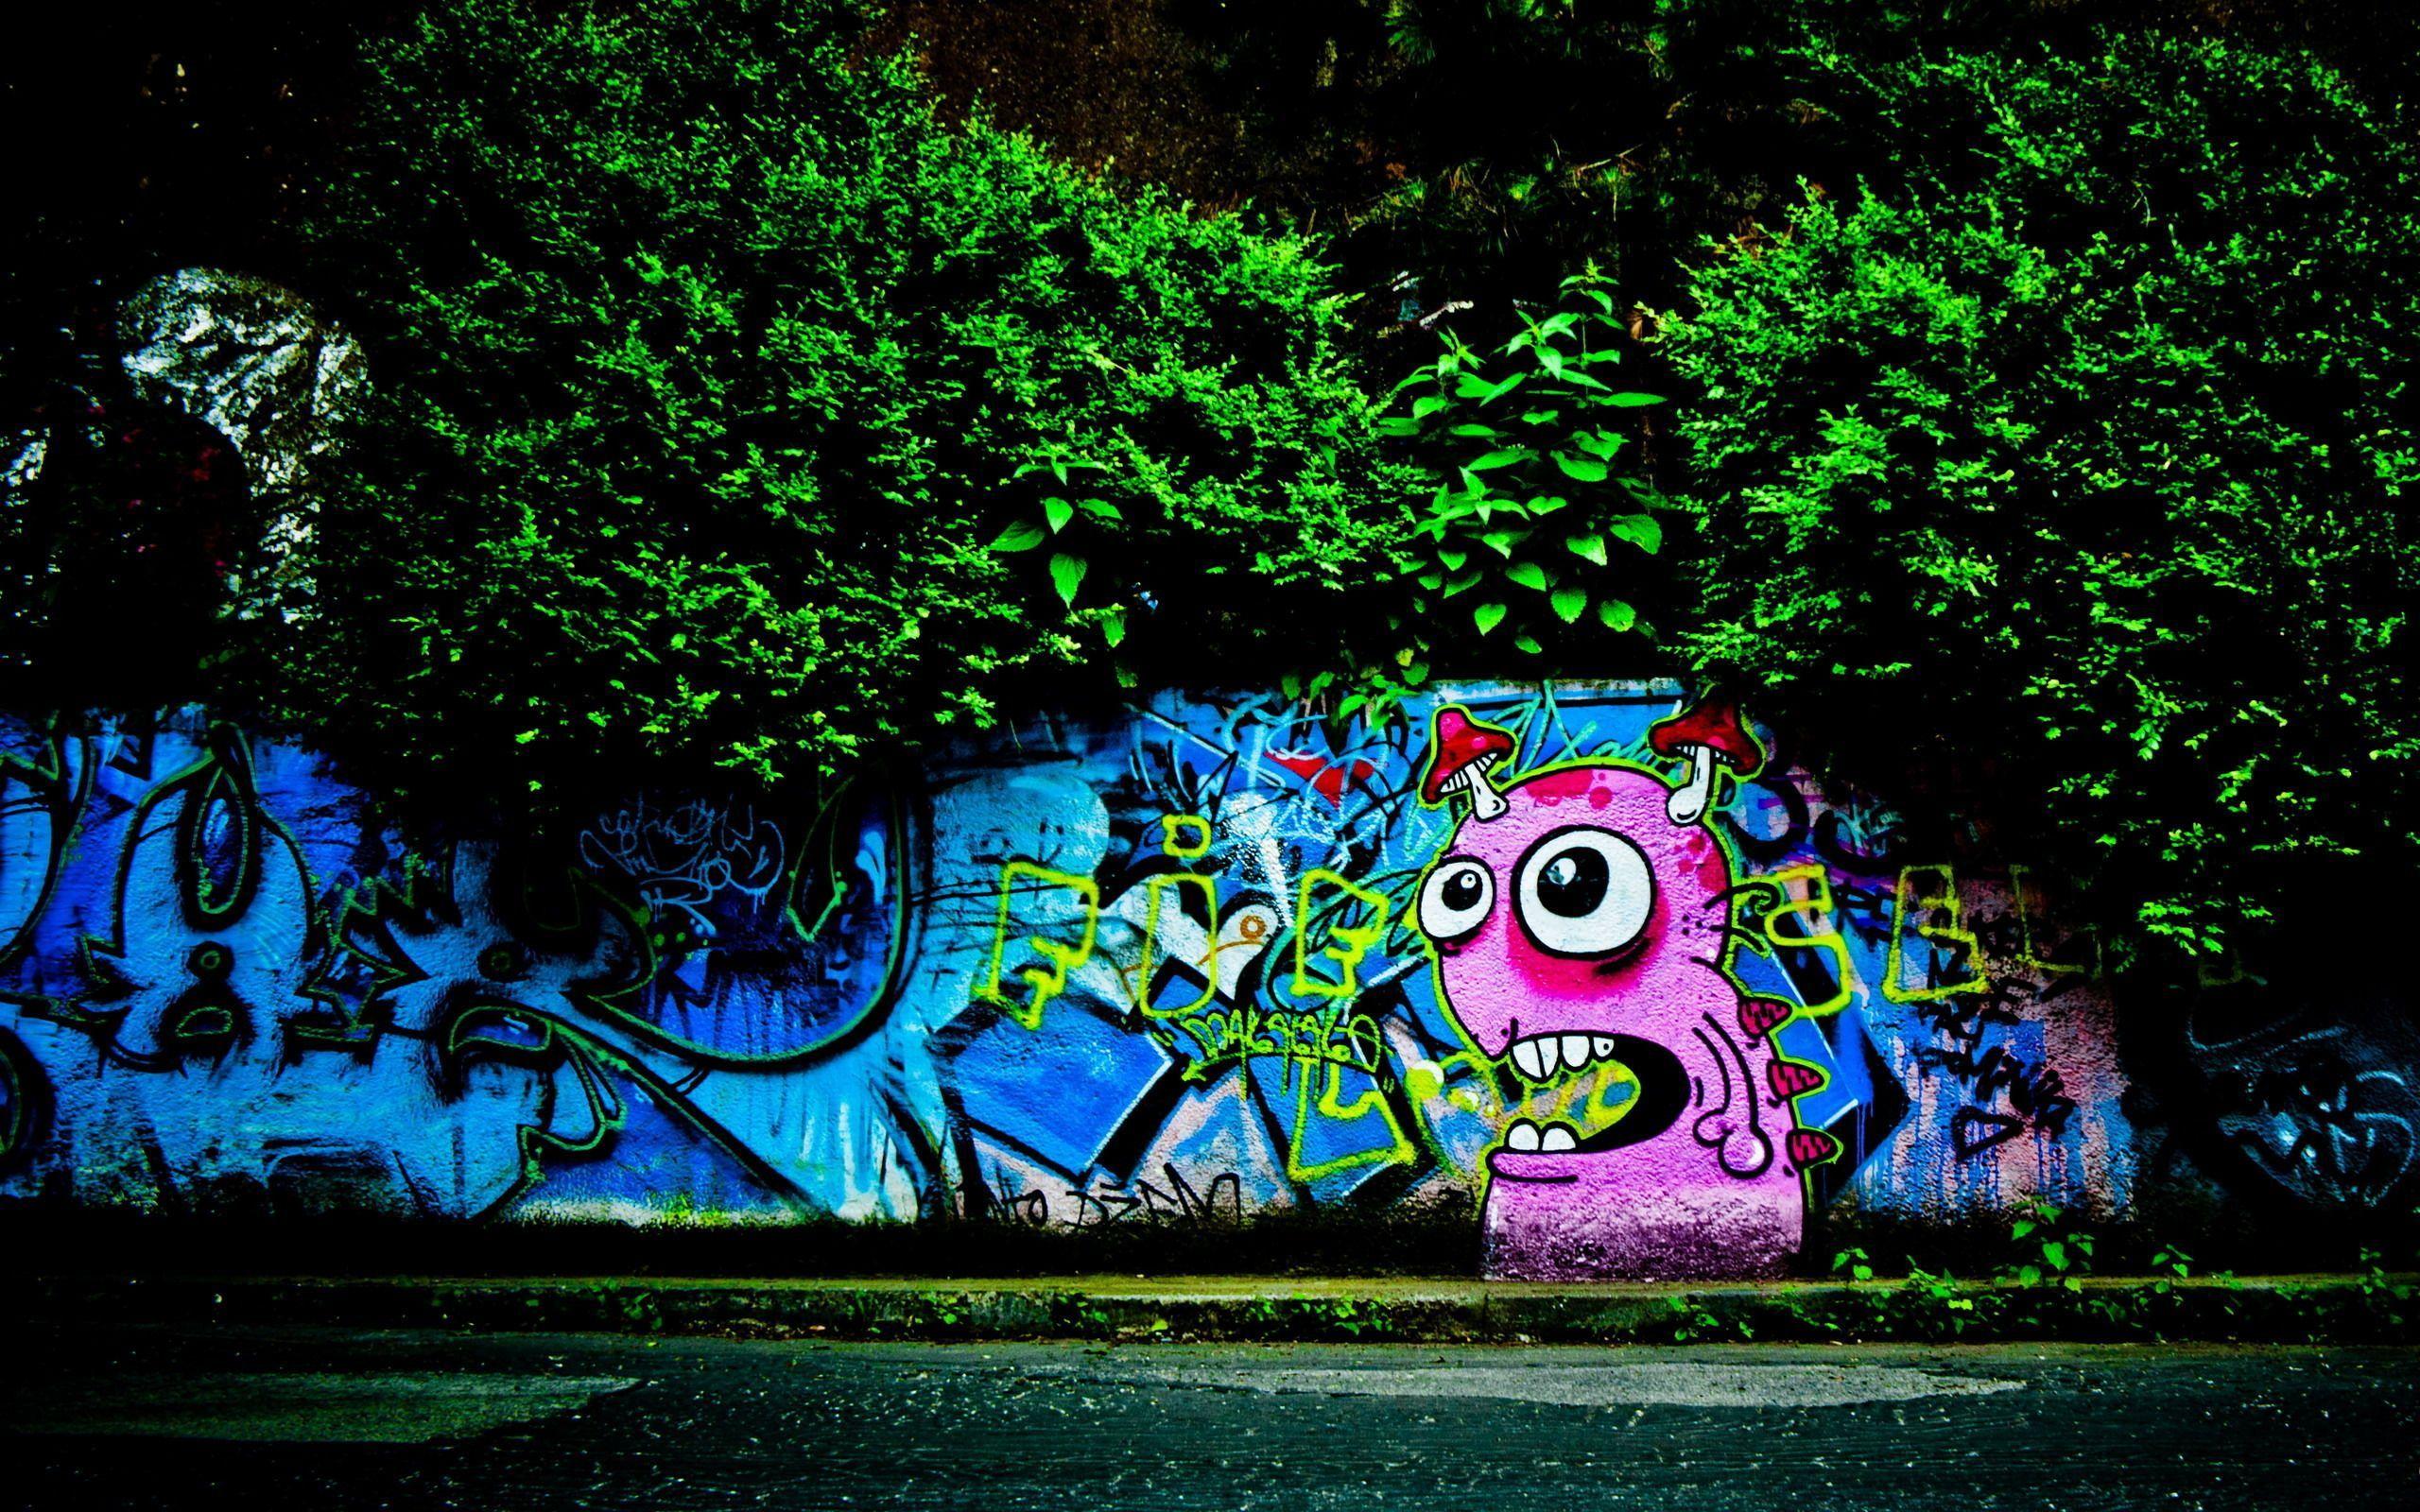 Background Graffiti Gallery juegosrev.com